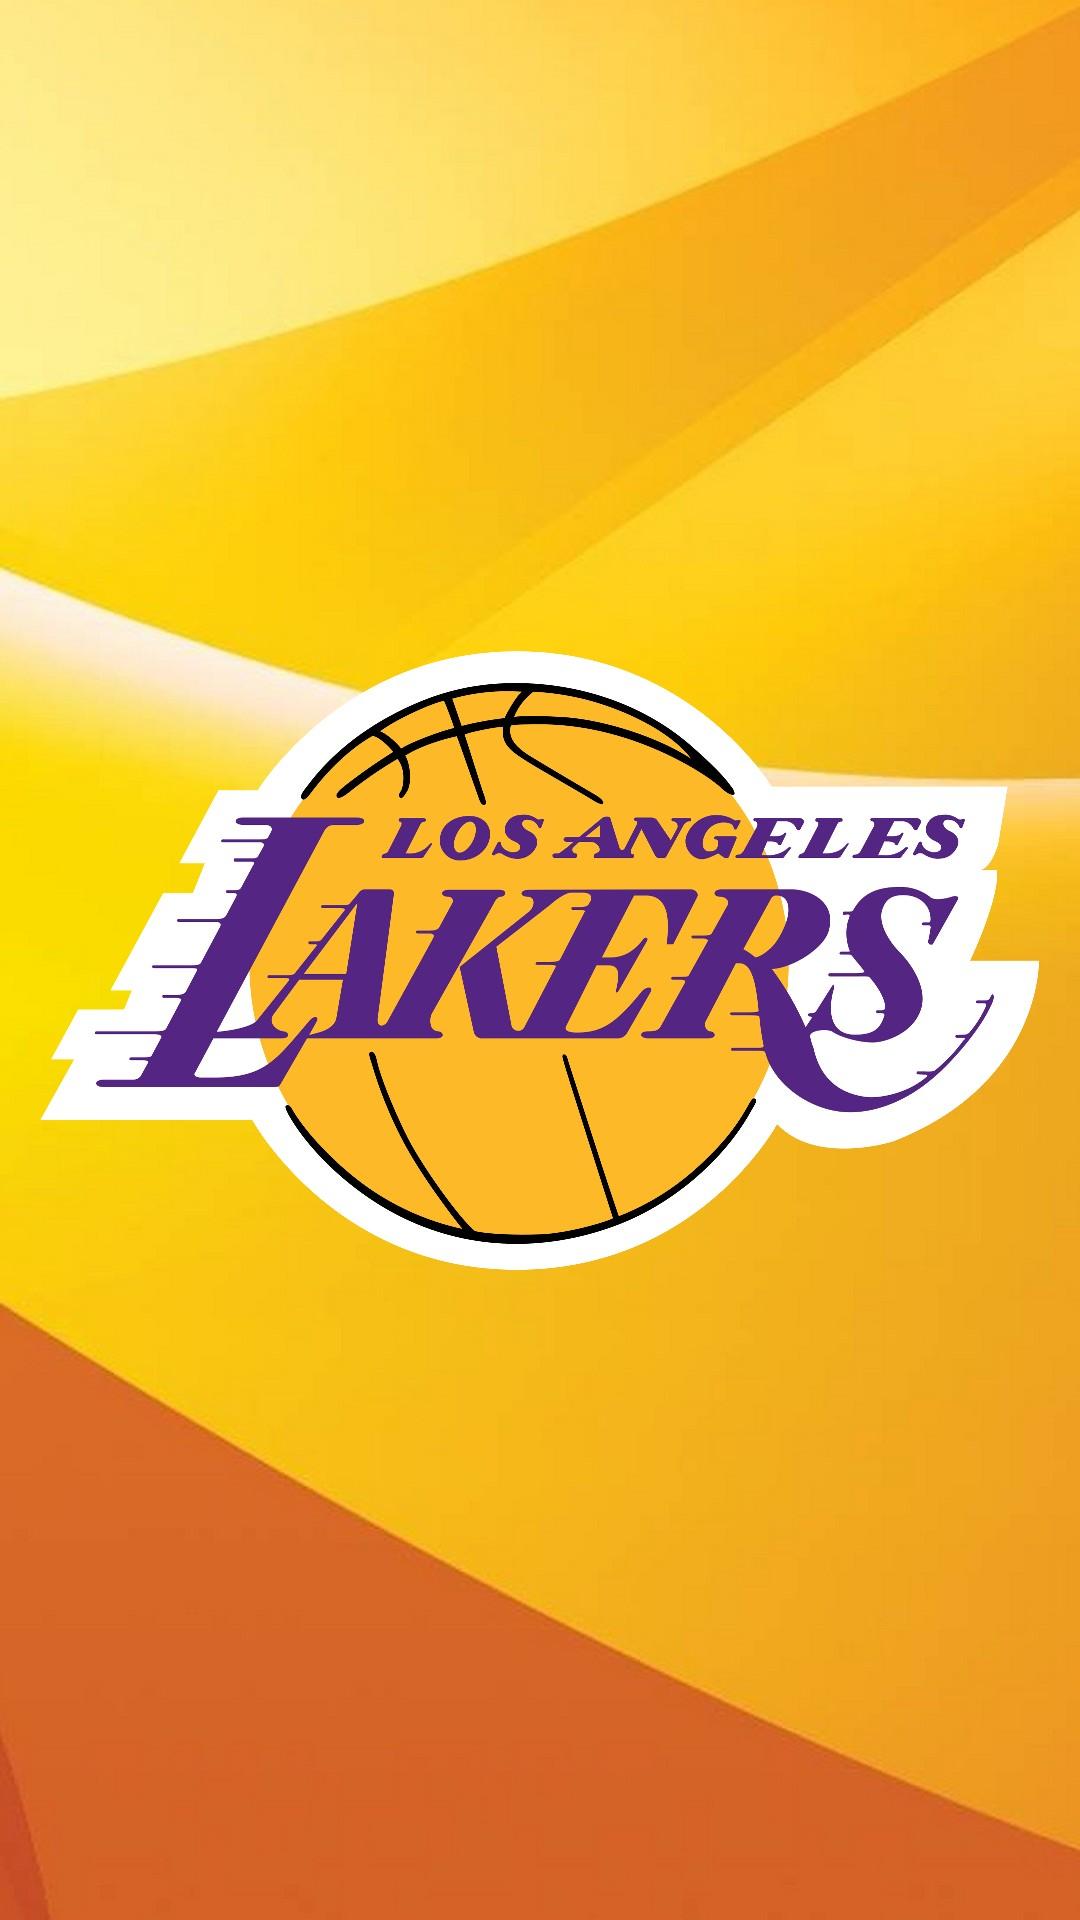 Los Angeles Lakers iPhone Wallpaper NBA iPhone Wallpaper